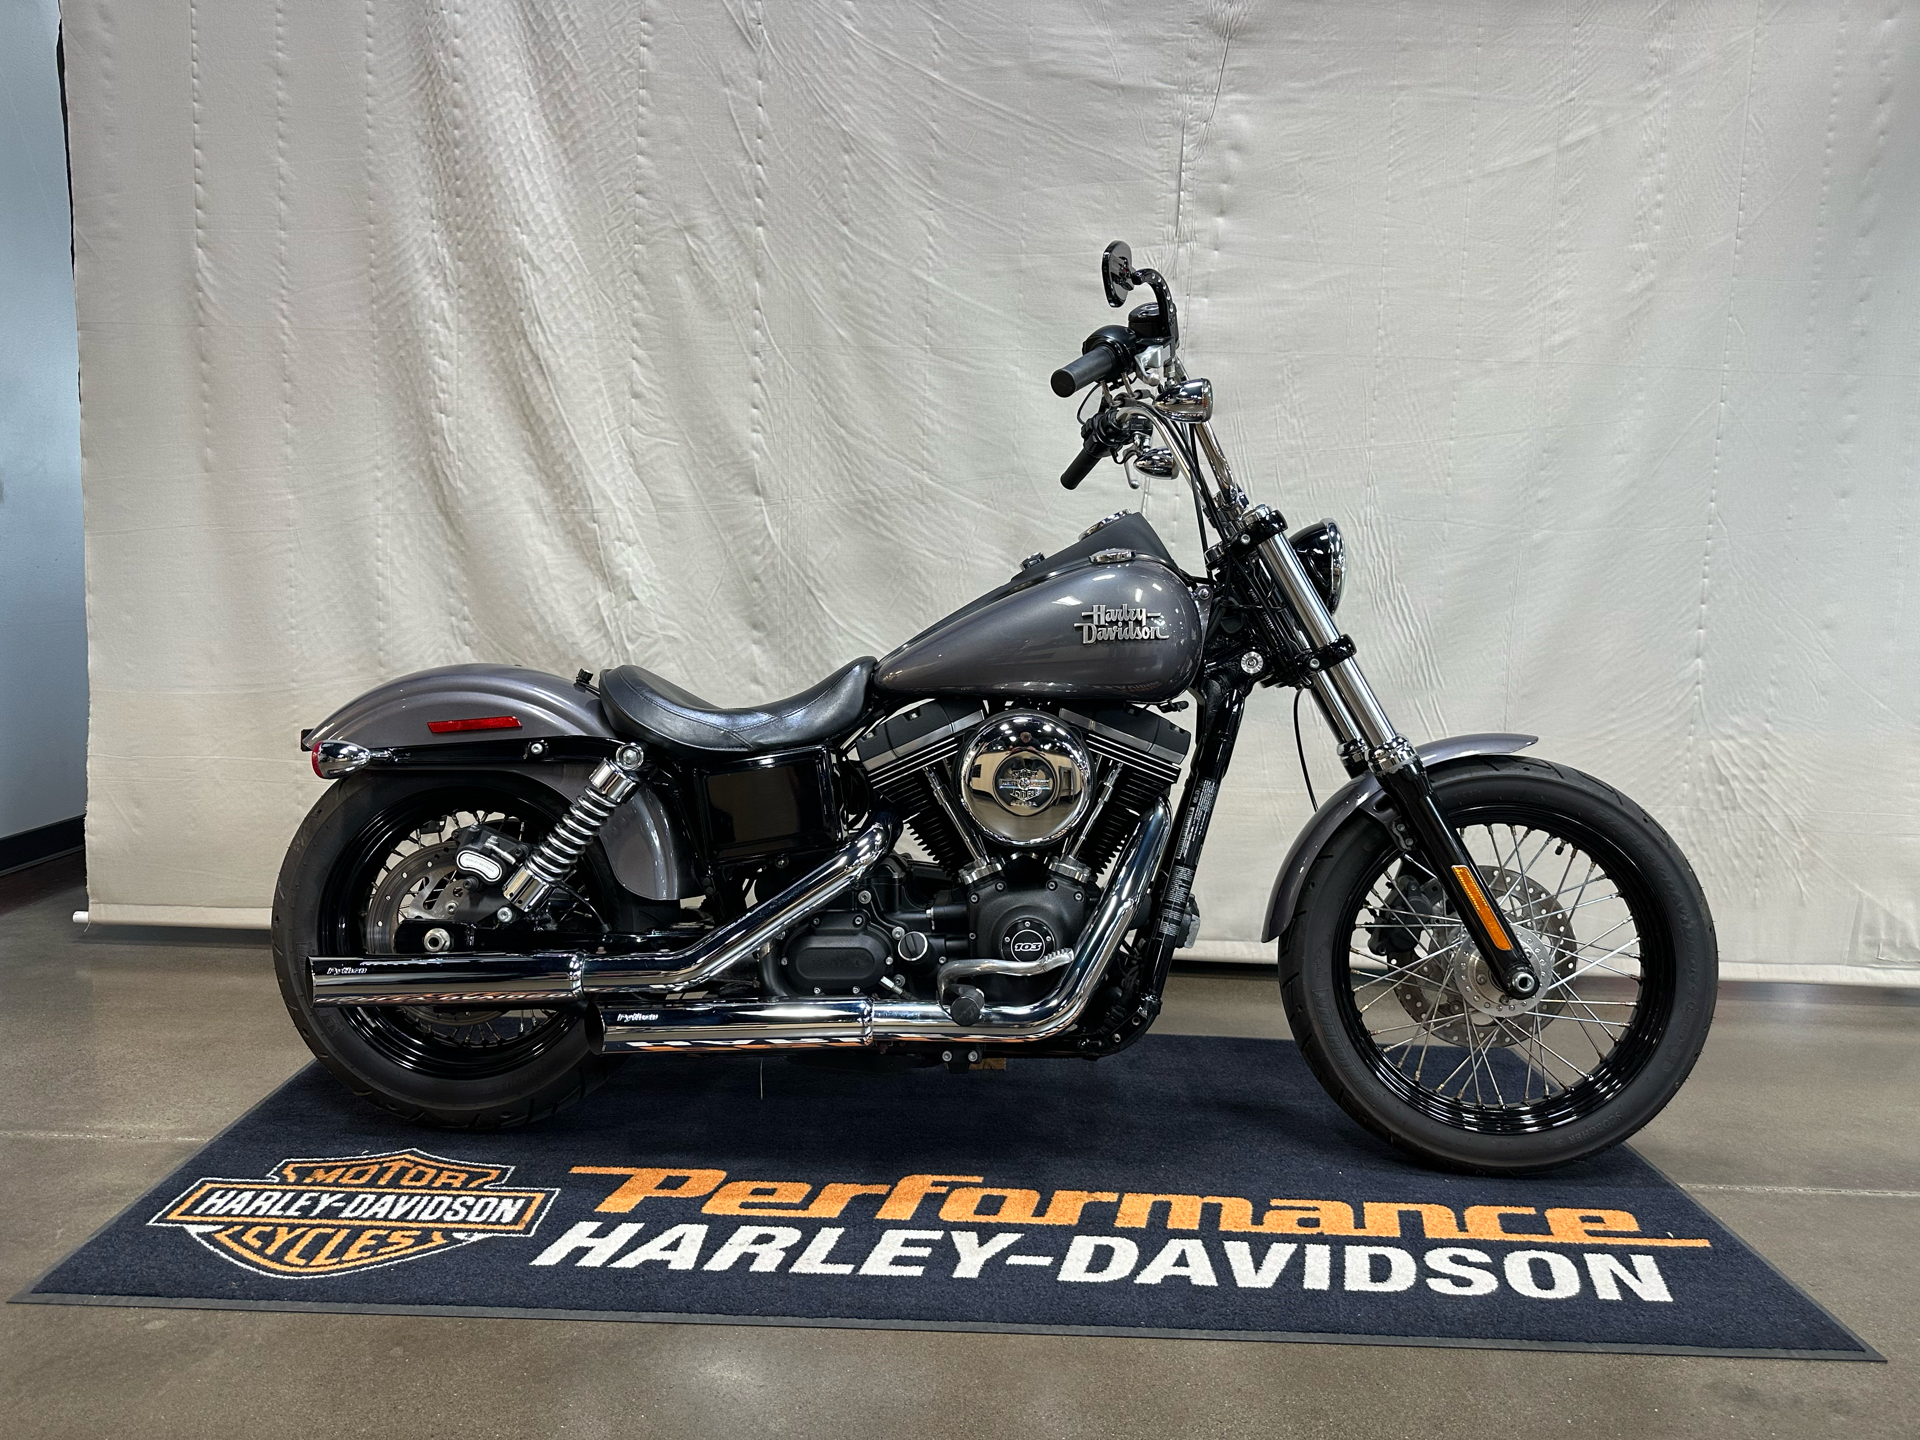 2016 Harley-Davidson Street Bob® in Syracuse, New York - Photo 1